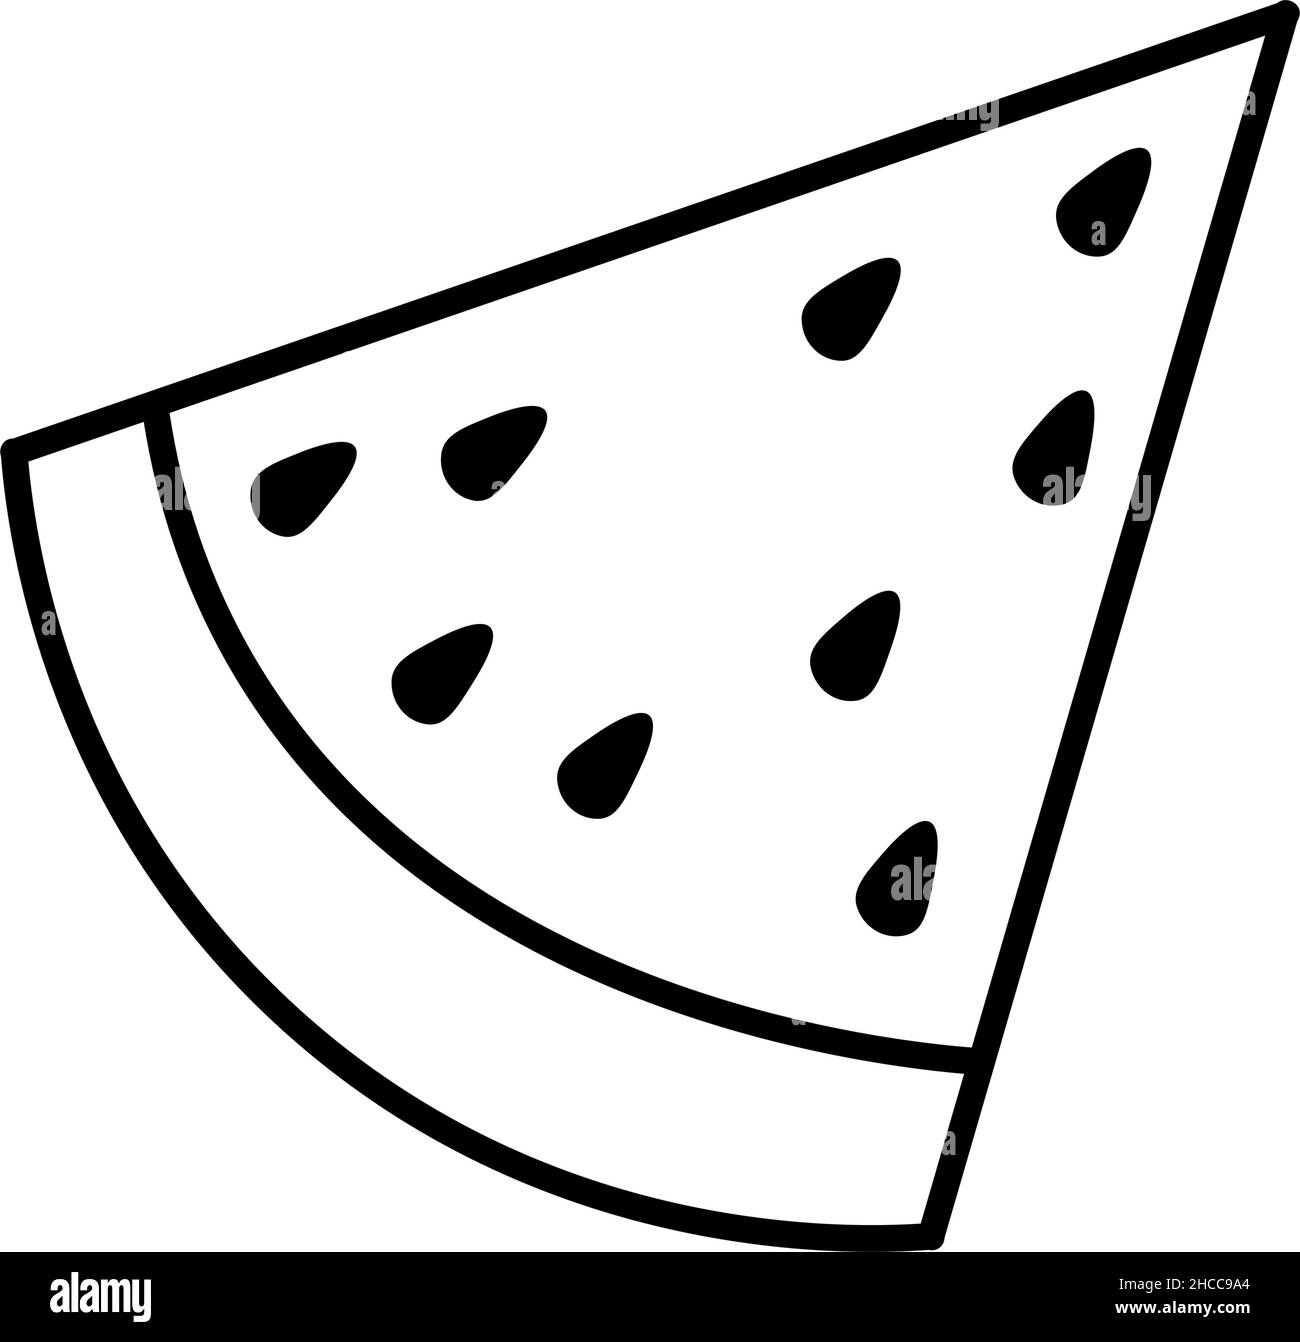 Linear cartoon hand drawn watermelon icon. Monochrome watermelon silhouette sign. Cute doodle watermelon slice. Stock Vector